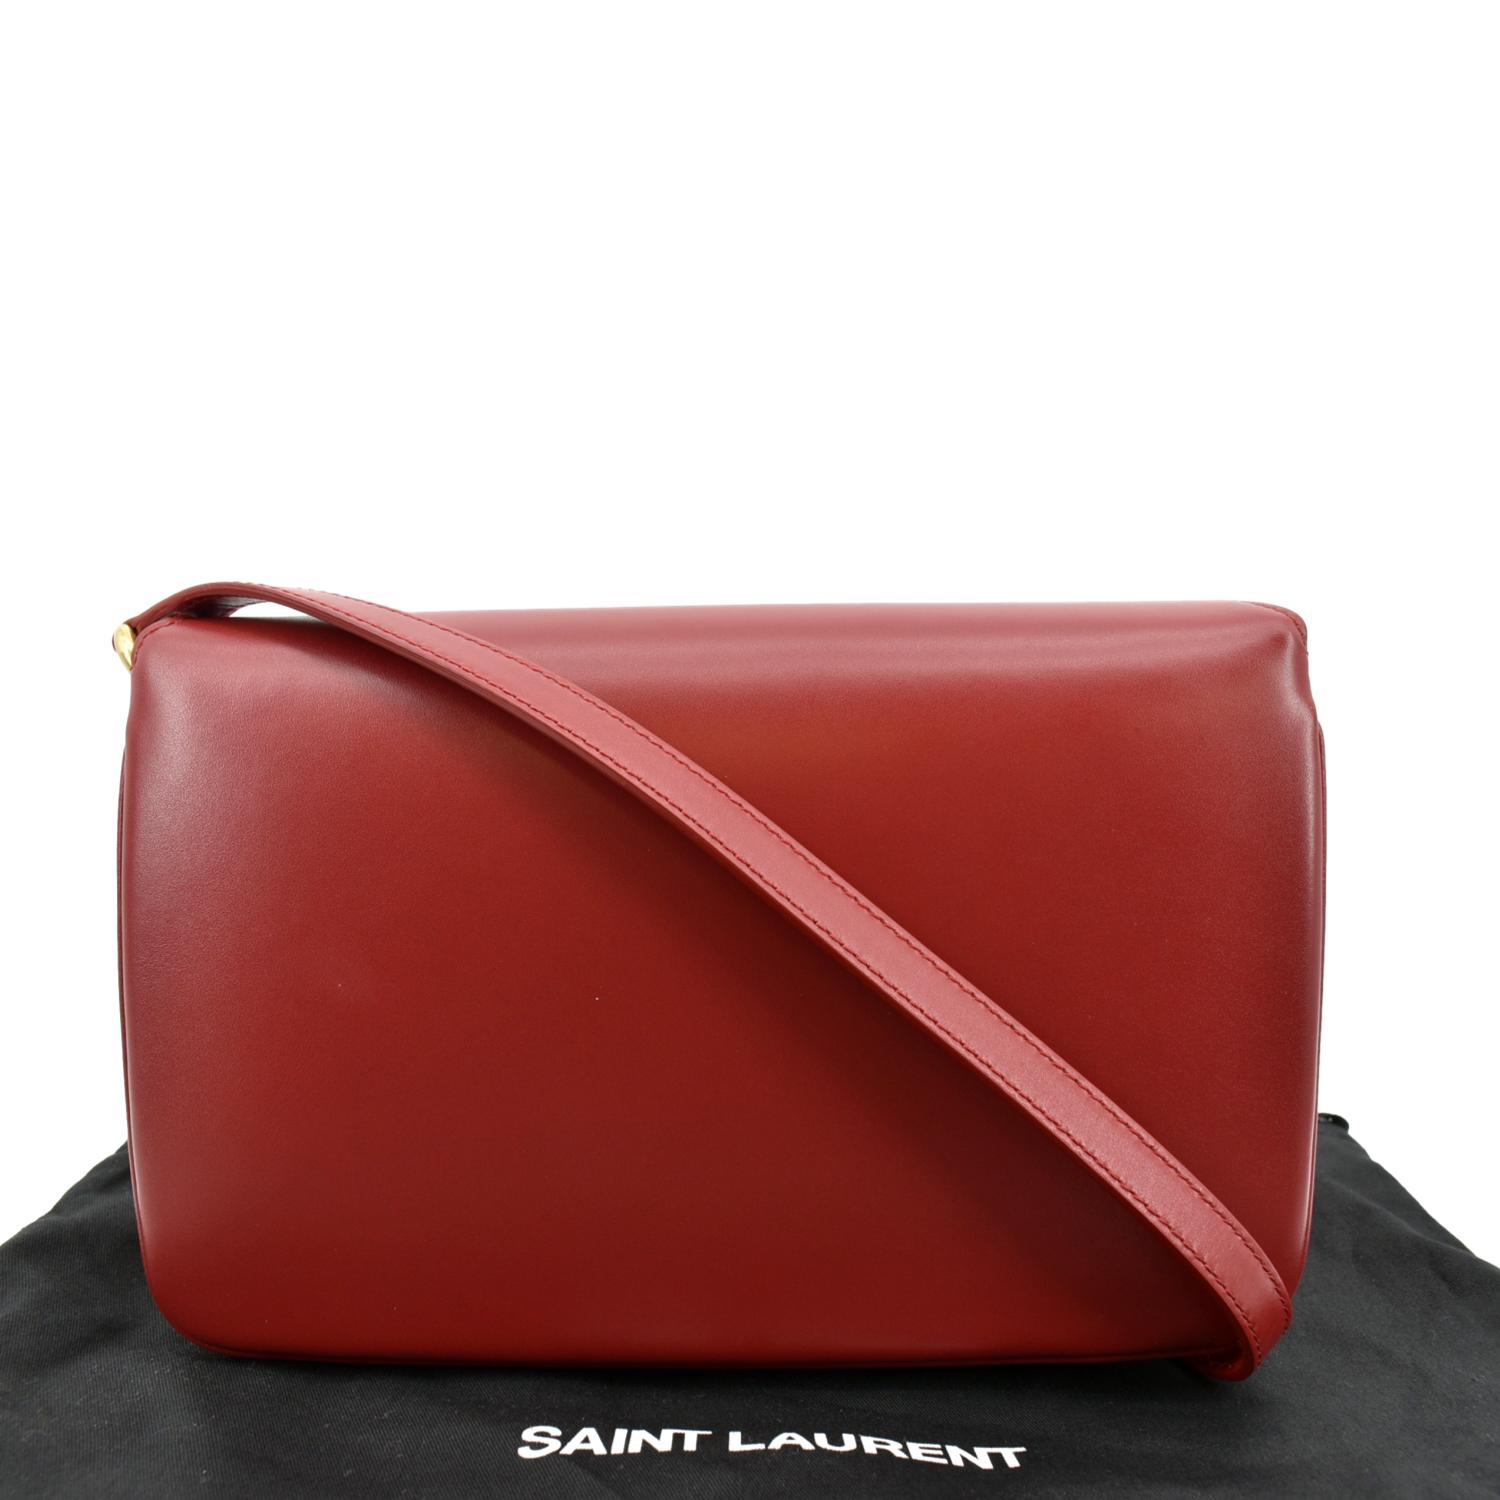 Yves Saint Laurent Medium Red College Bag | eBay